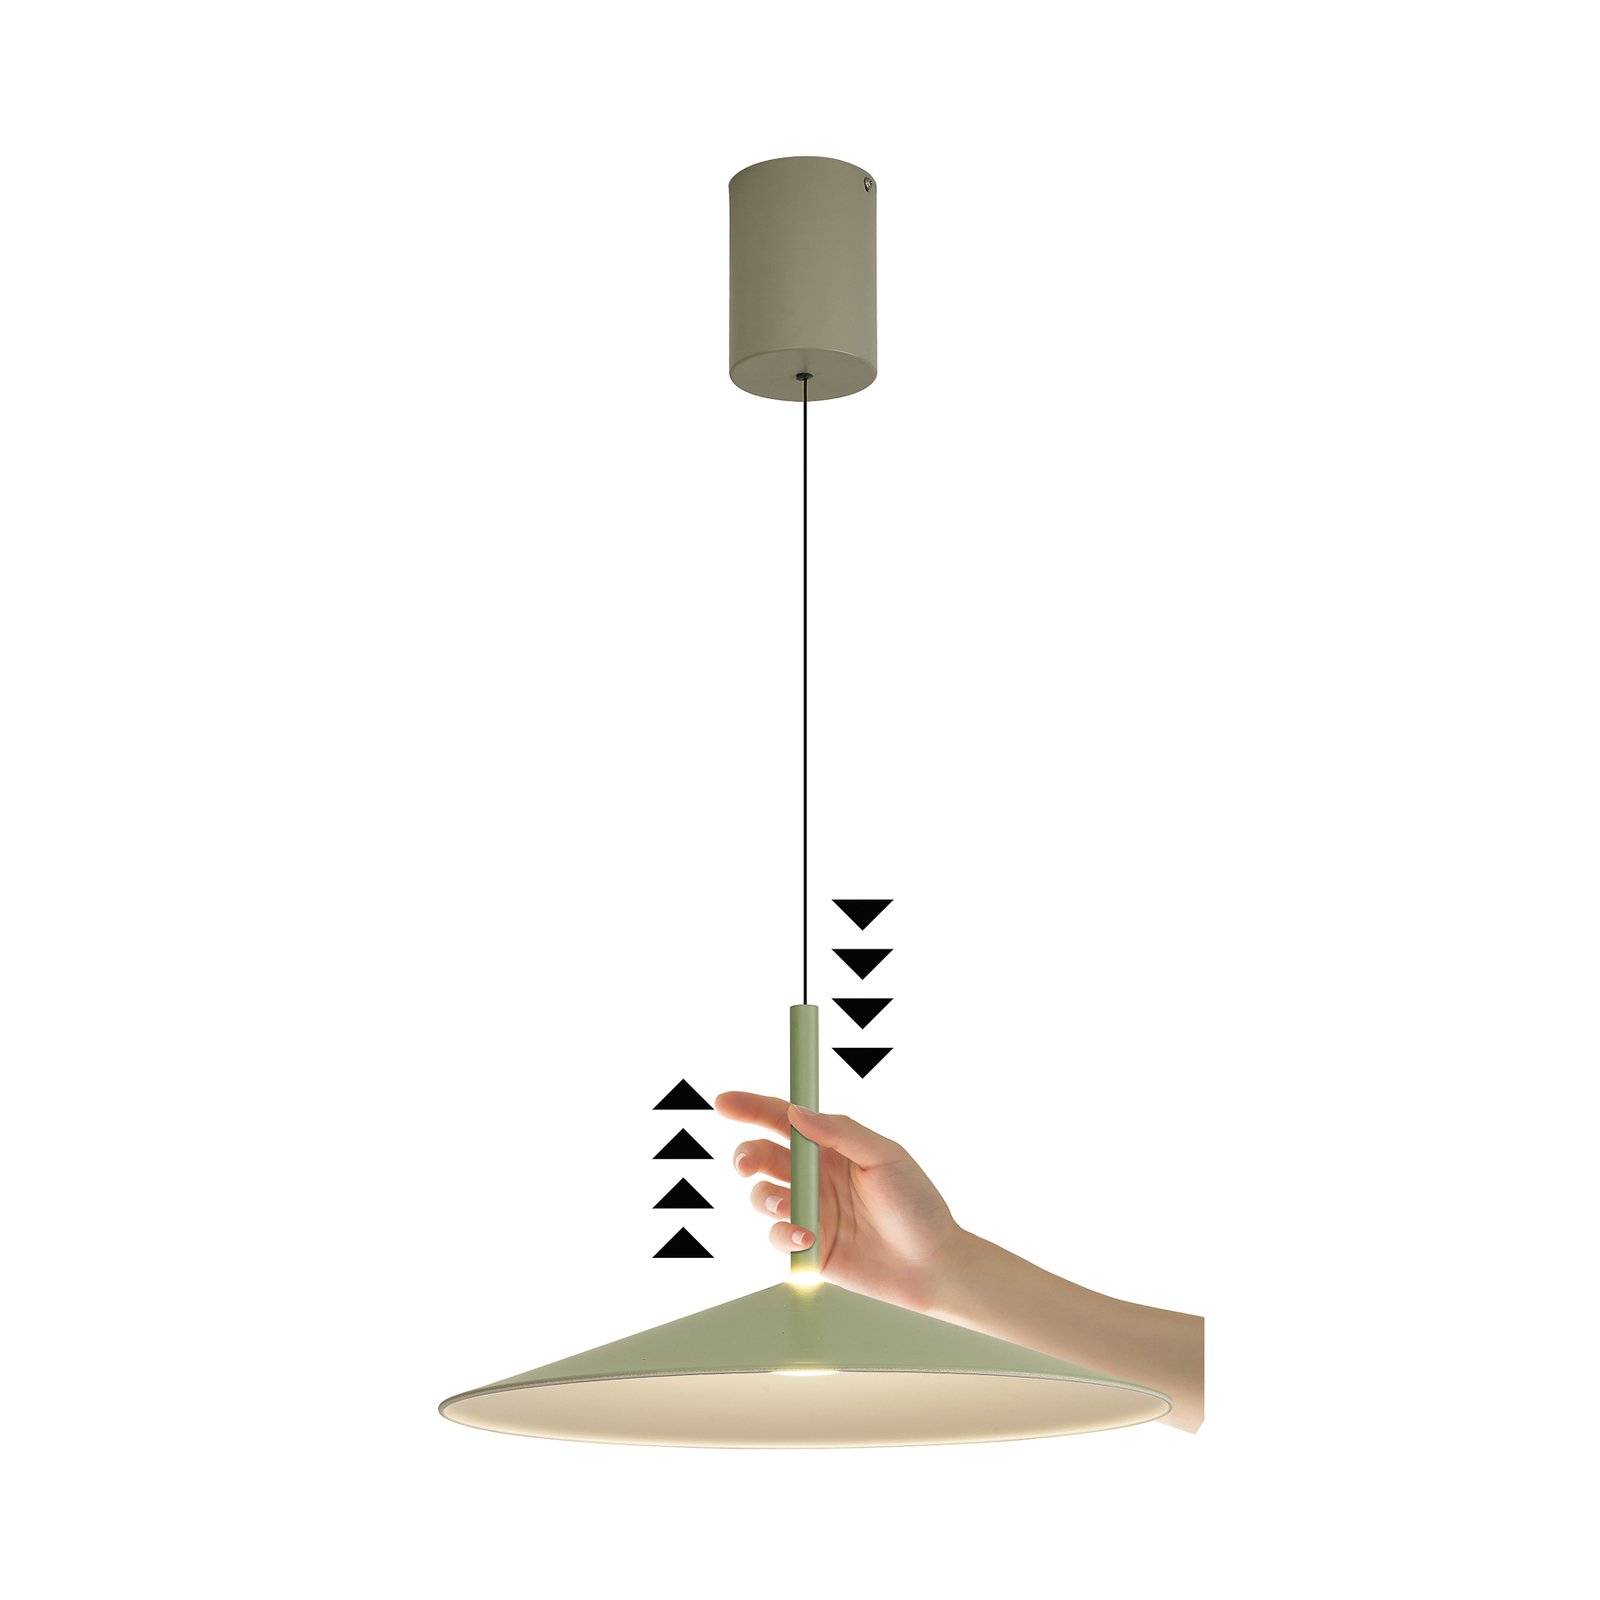 Lampada a sospensione Calice LED, verde, Ø 47,5 cm, regolabile in altezza